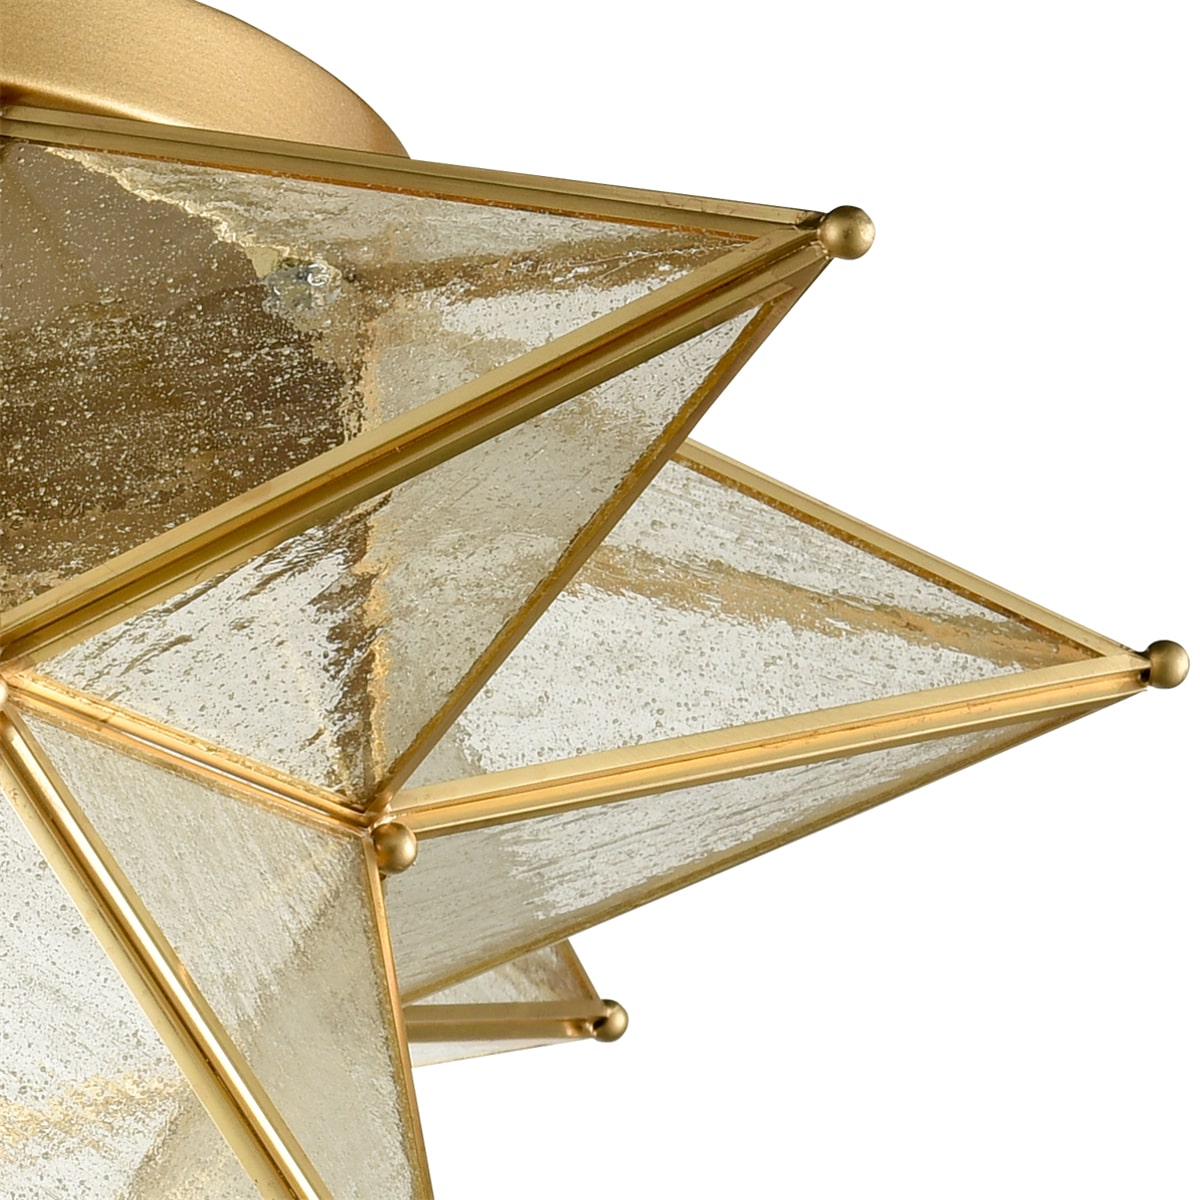 Brass Moravian Star Ceiling Light Seeded Glass 18-Inch